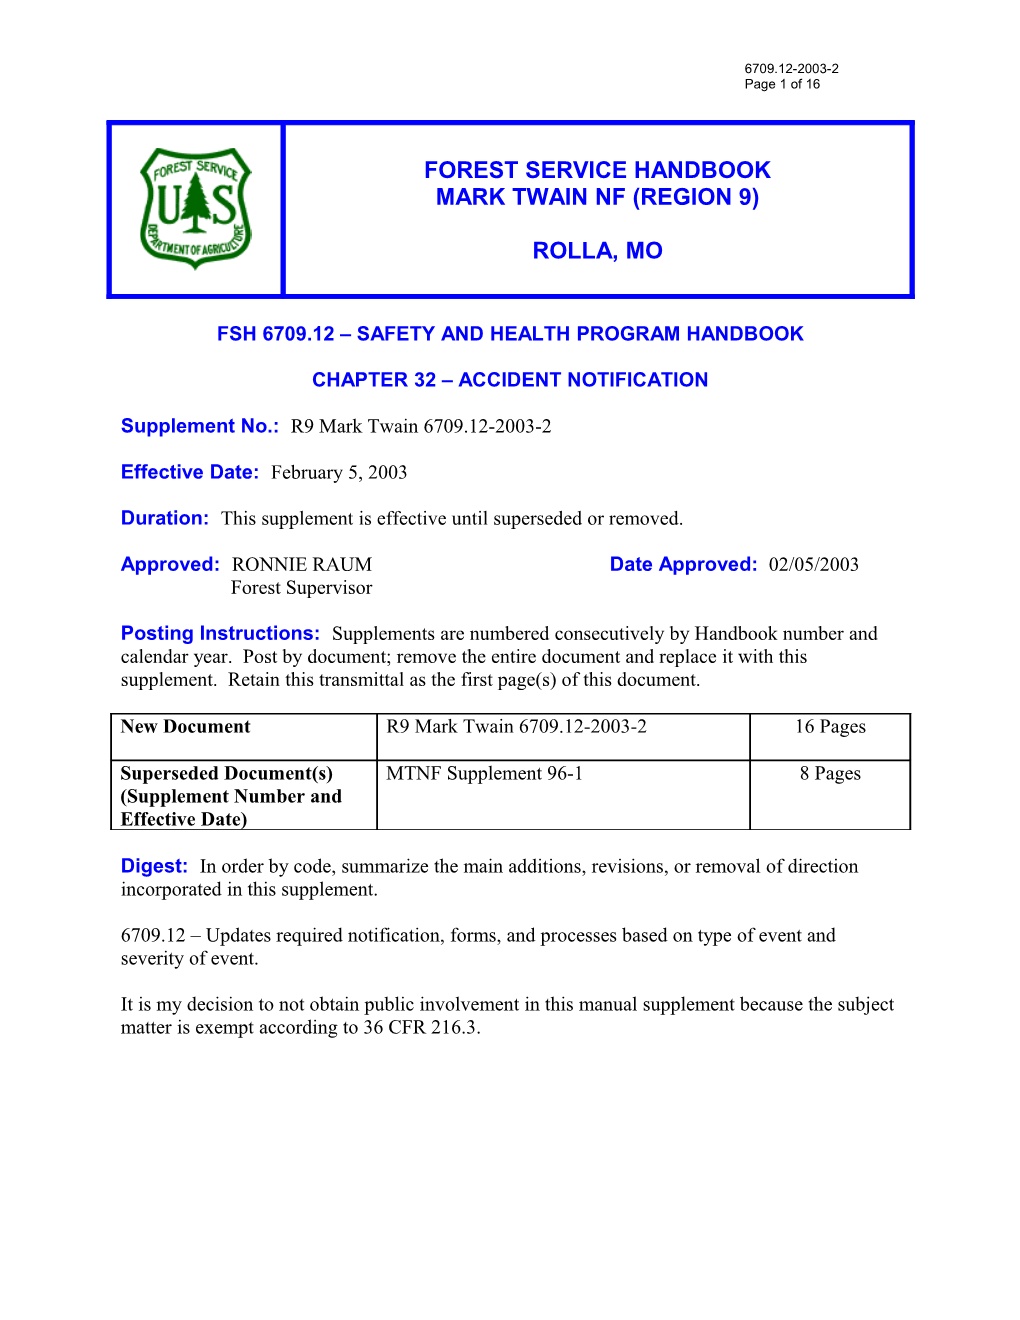 Fsh 6709.12 Safety and Health Program Handbook